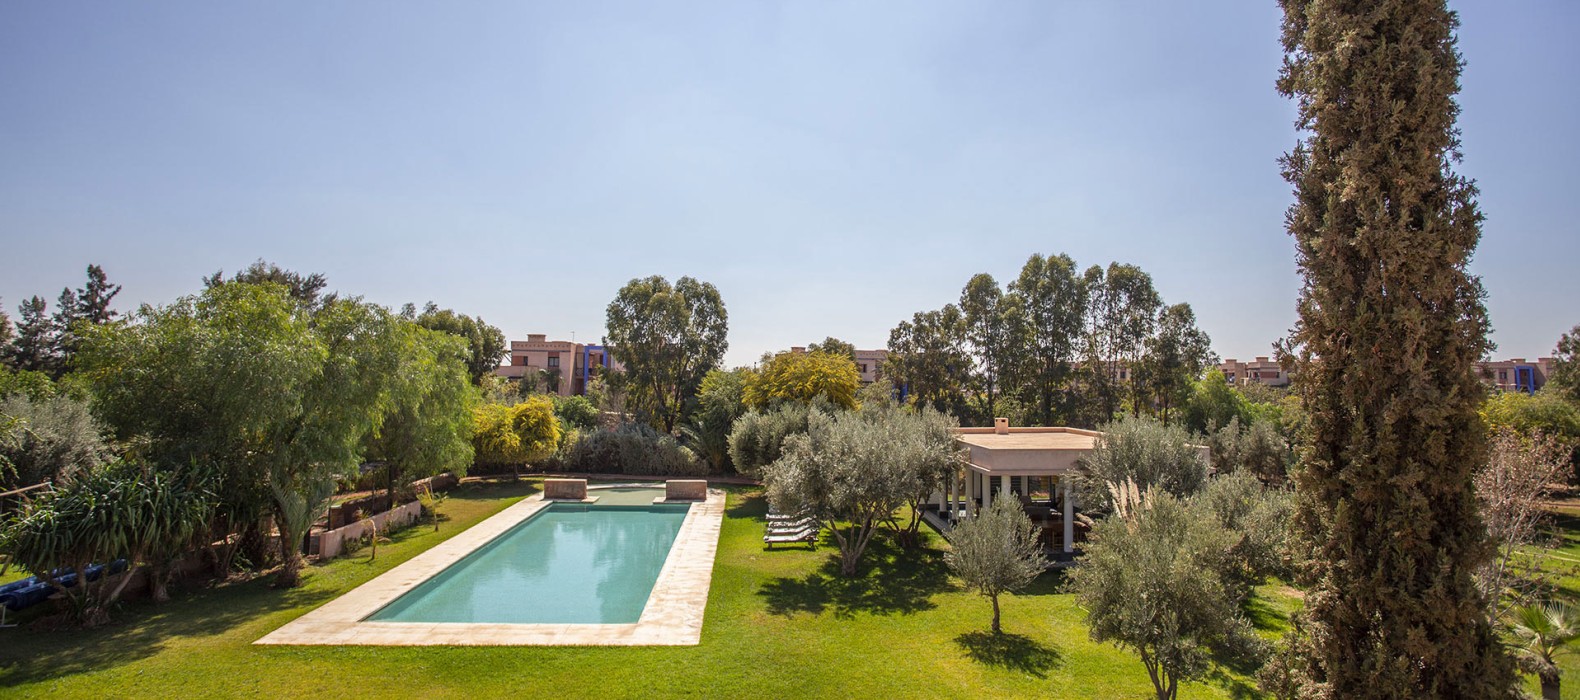 Landscape view of Villa Gauthier in Marrakech